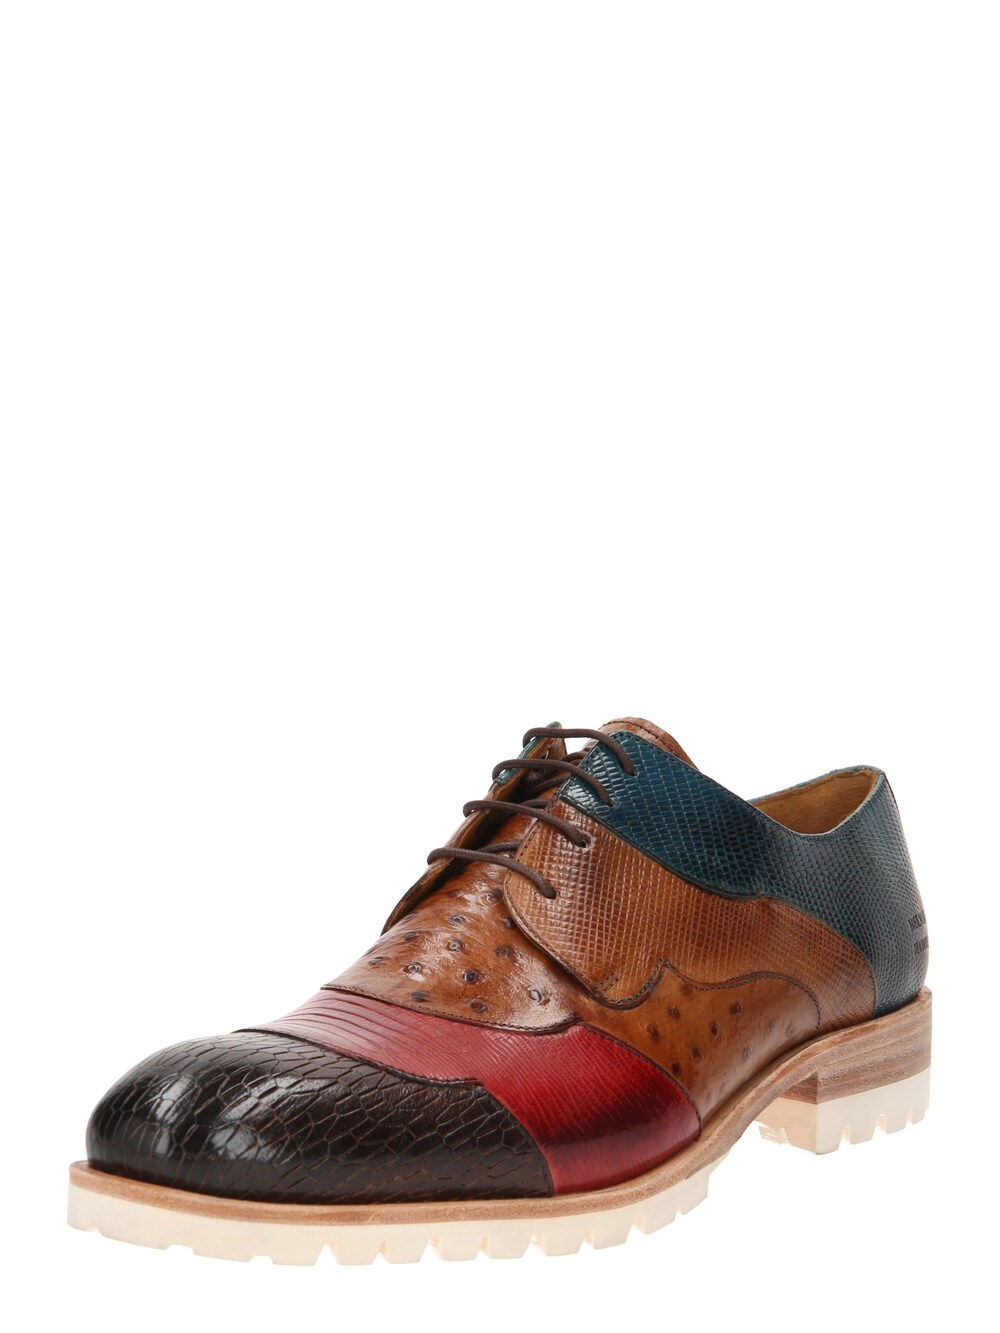 Обувь на шнуровке MELVIN & HAMILTON Patrick, смешанные цвета